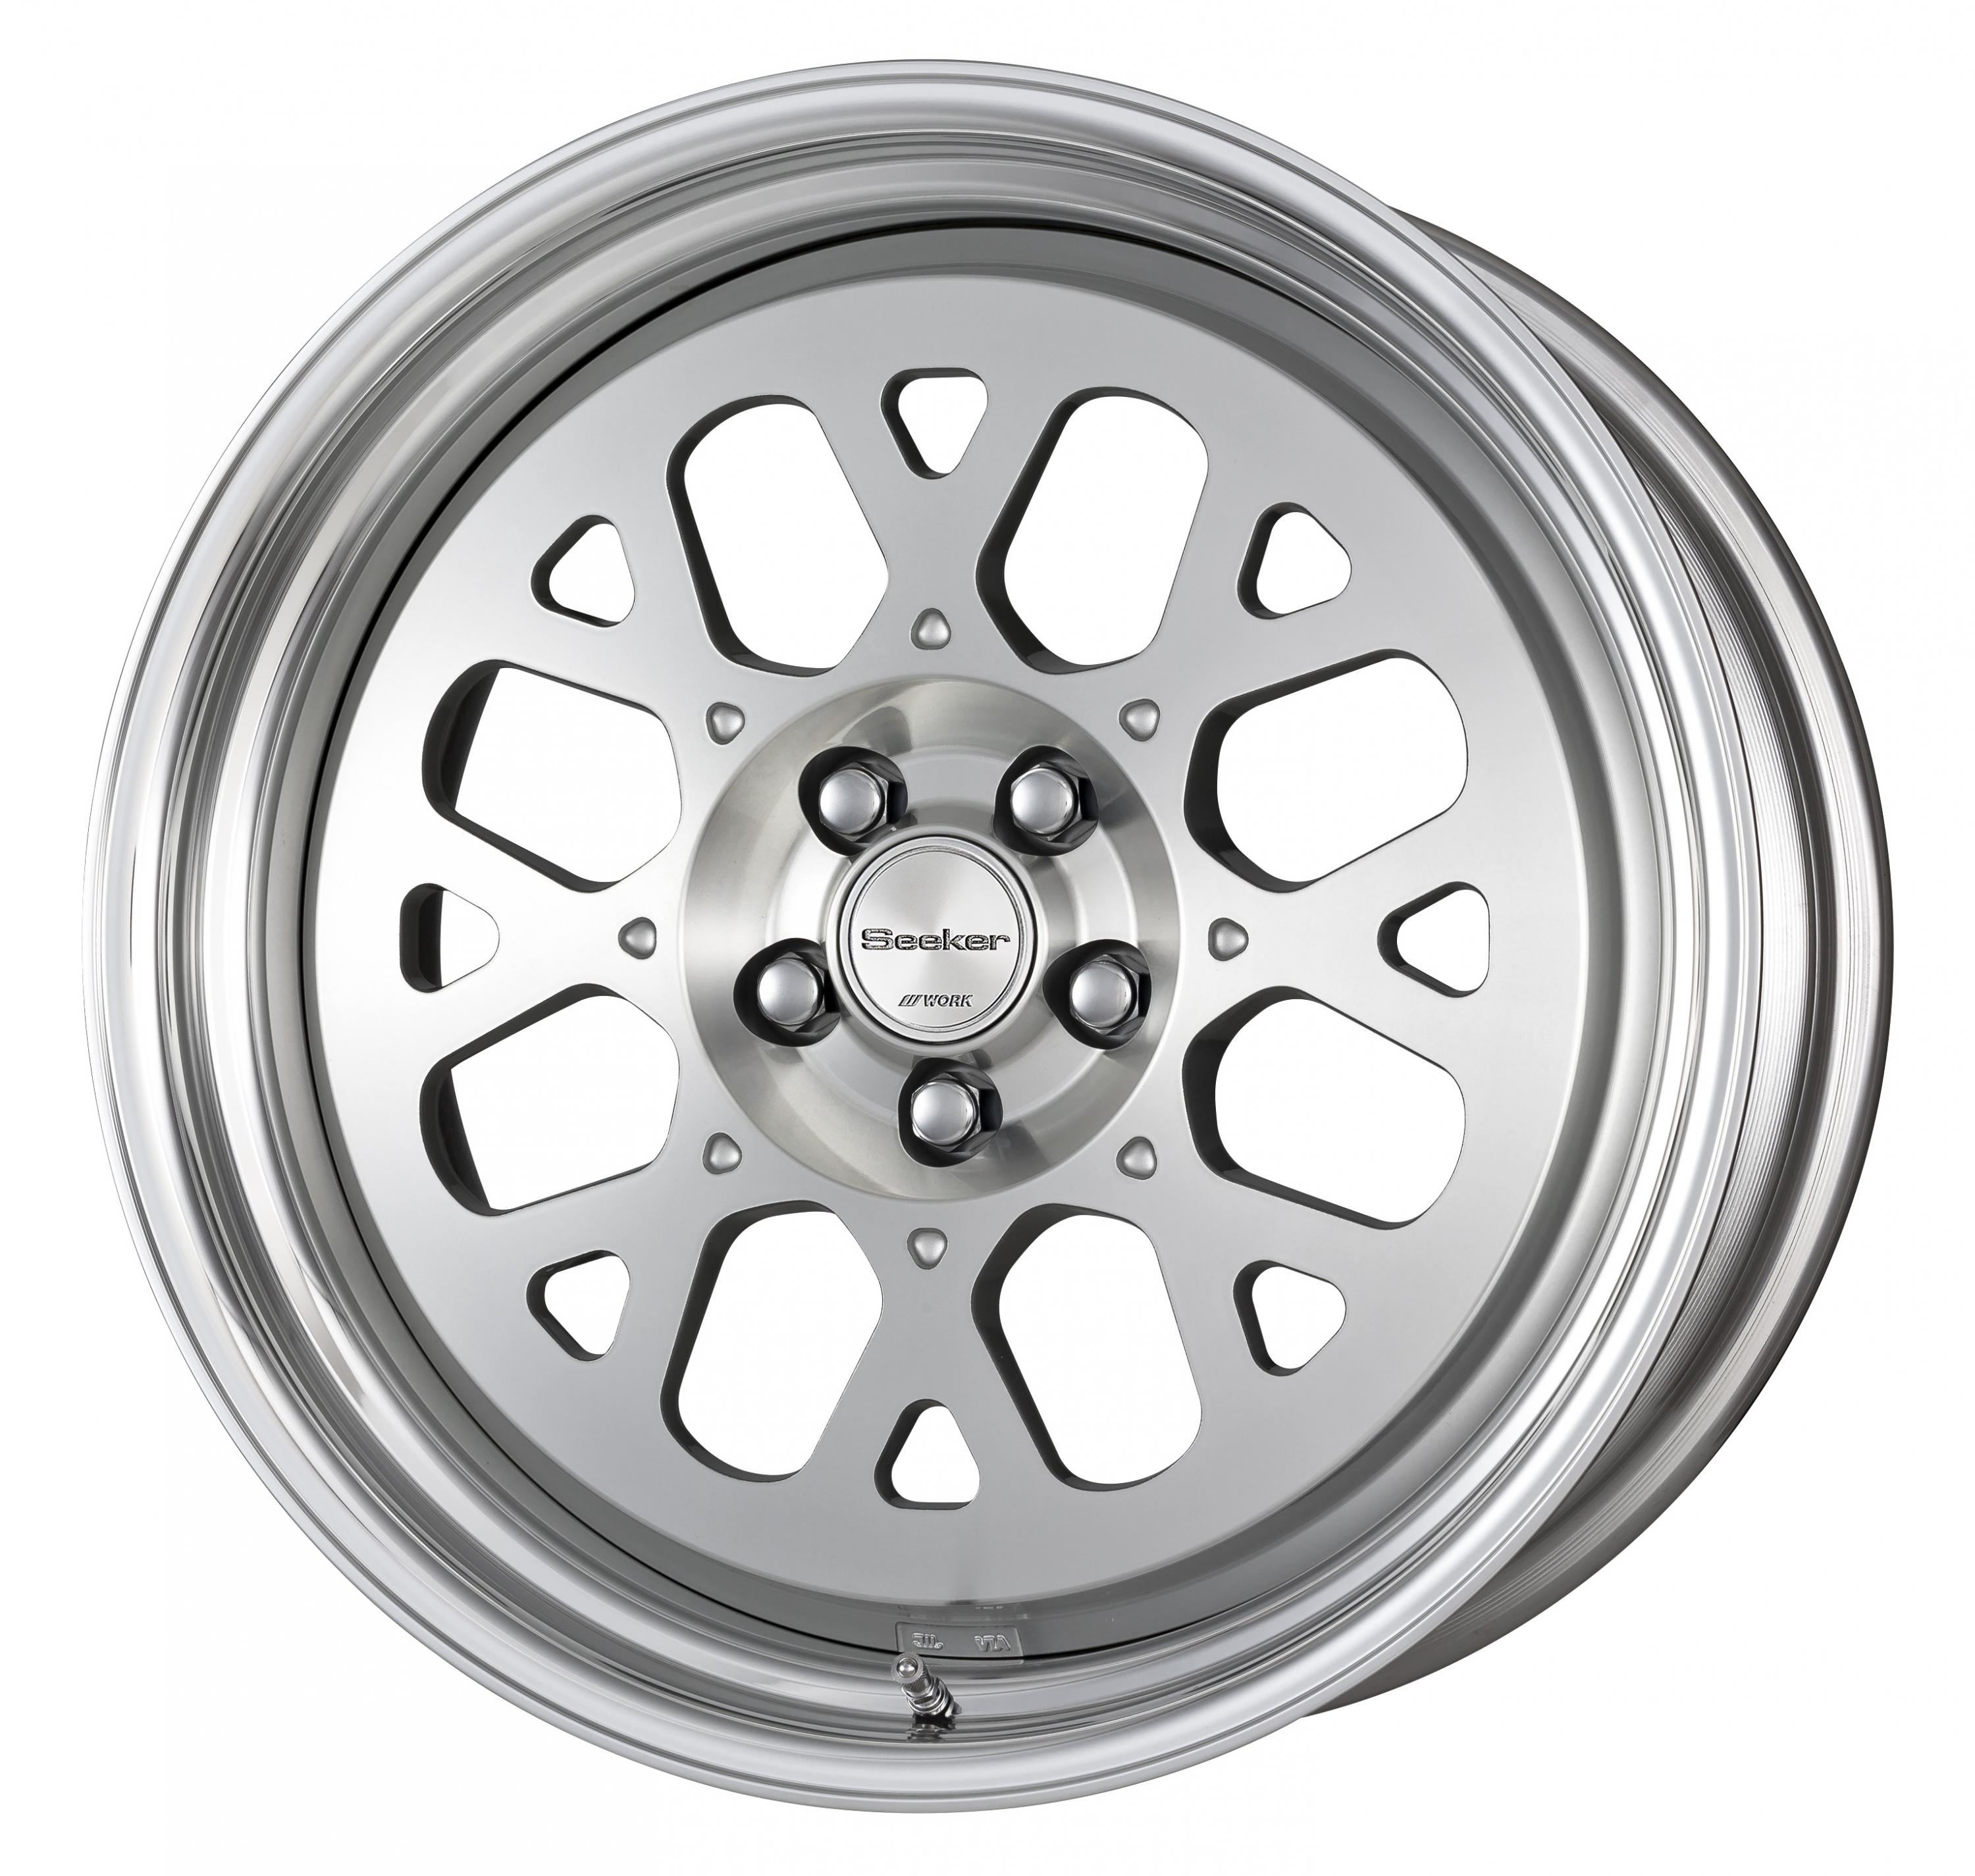 Work Seeker GX 17” Wheel For Mazda Miata MX5 | REV9